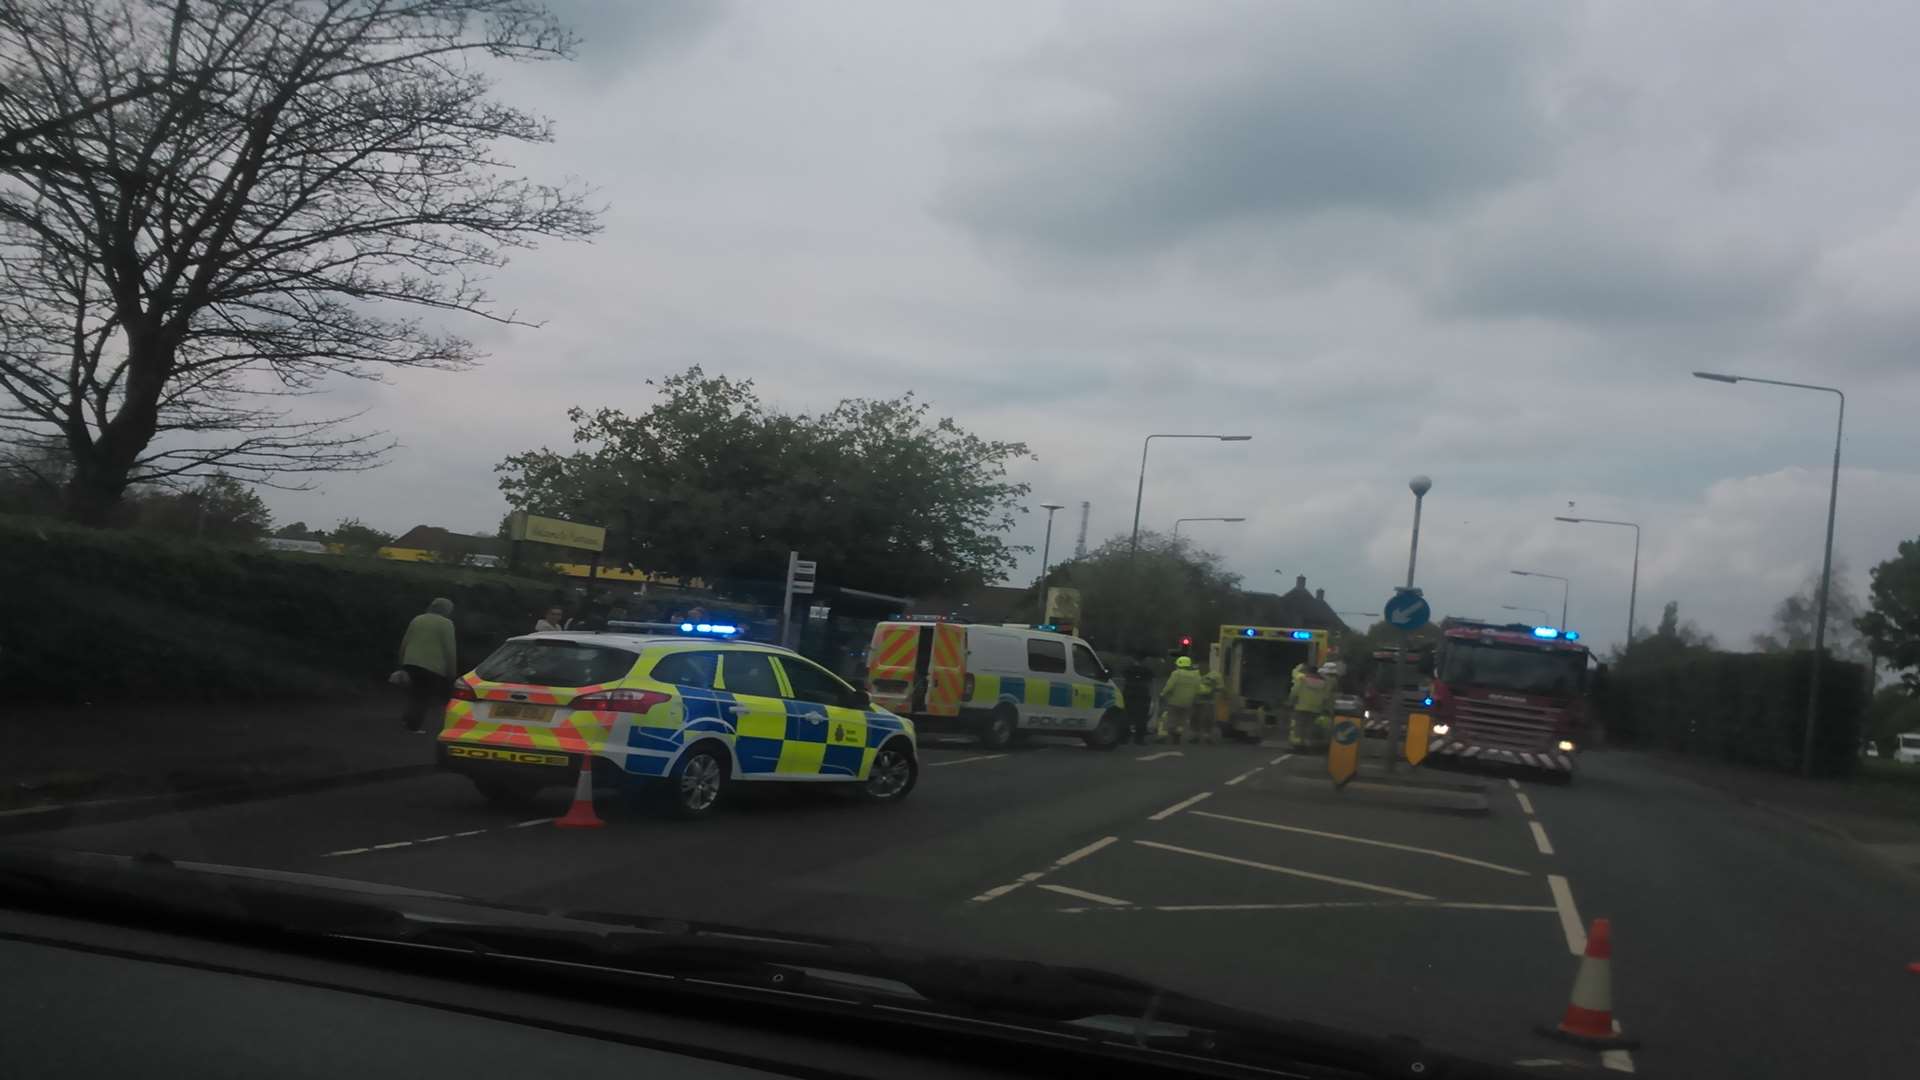 The scene of the crash in Sutton Road